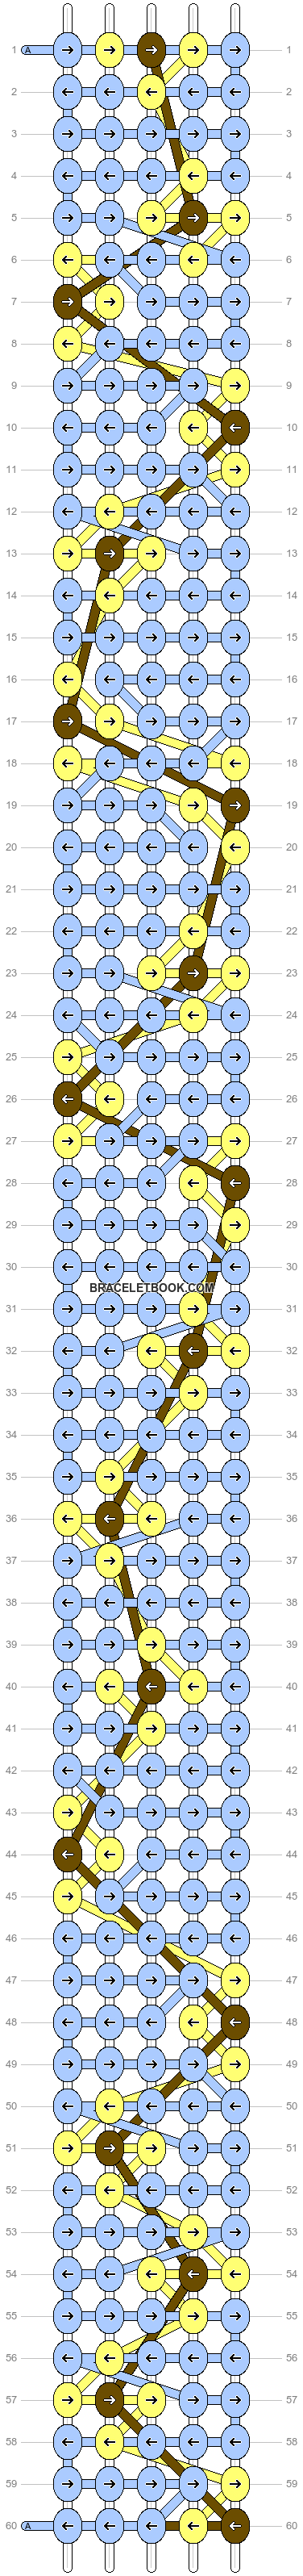 Alpha pattern #38852 variation #44985 pattern